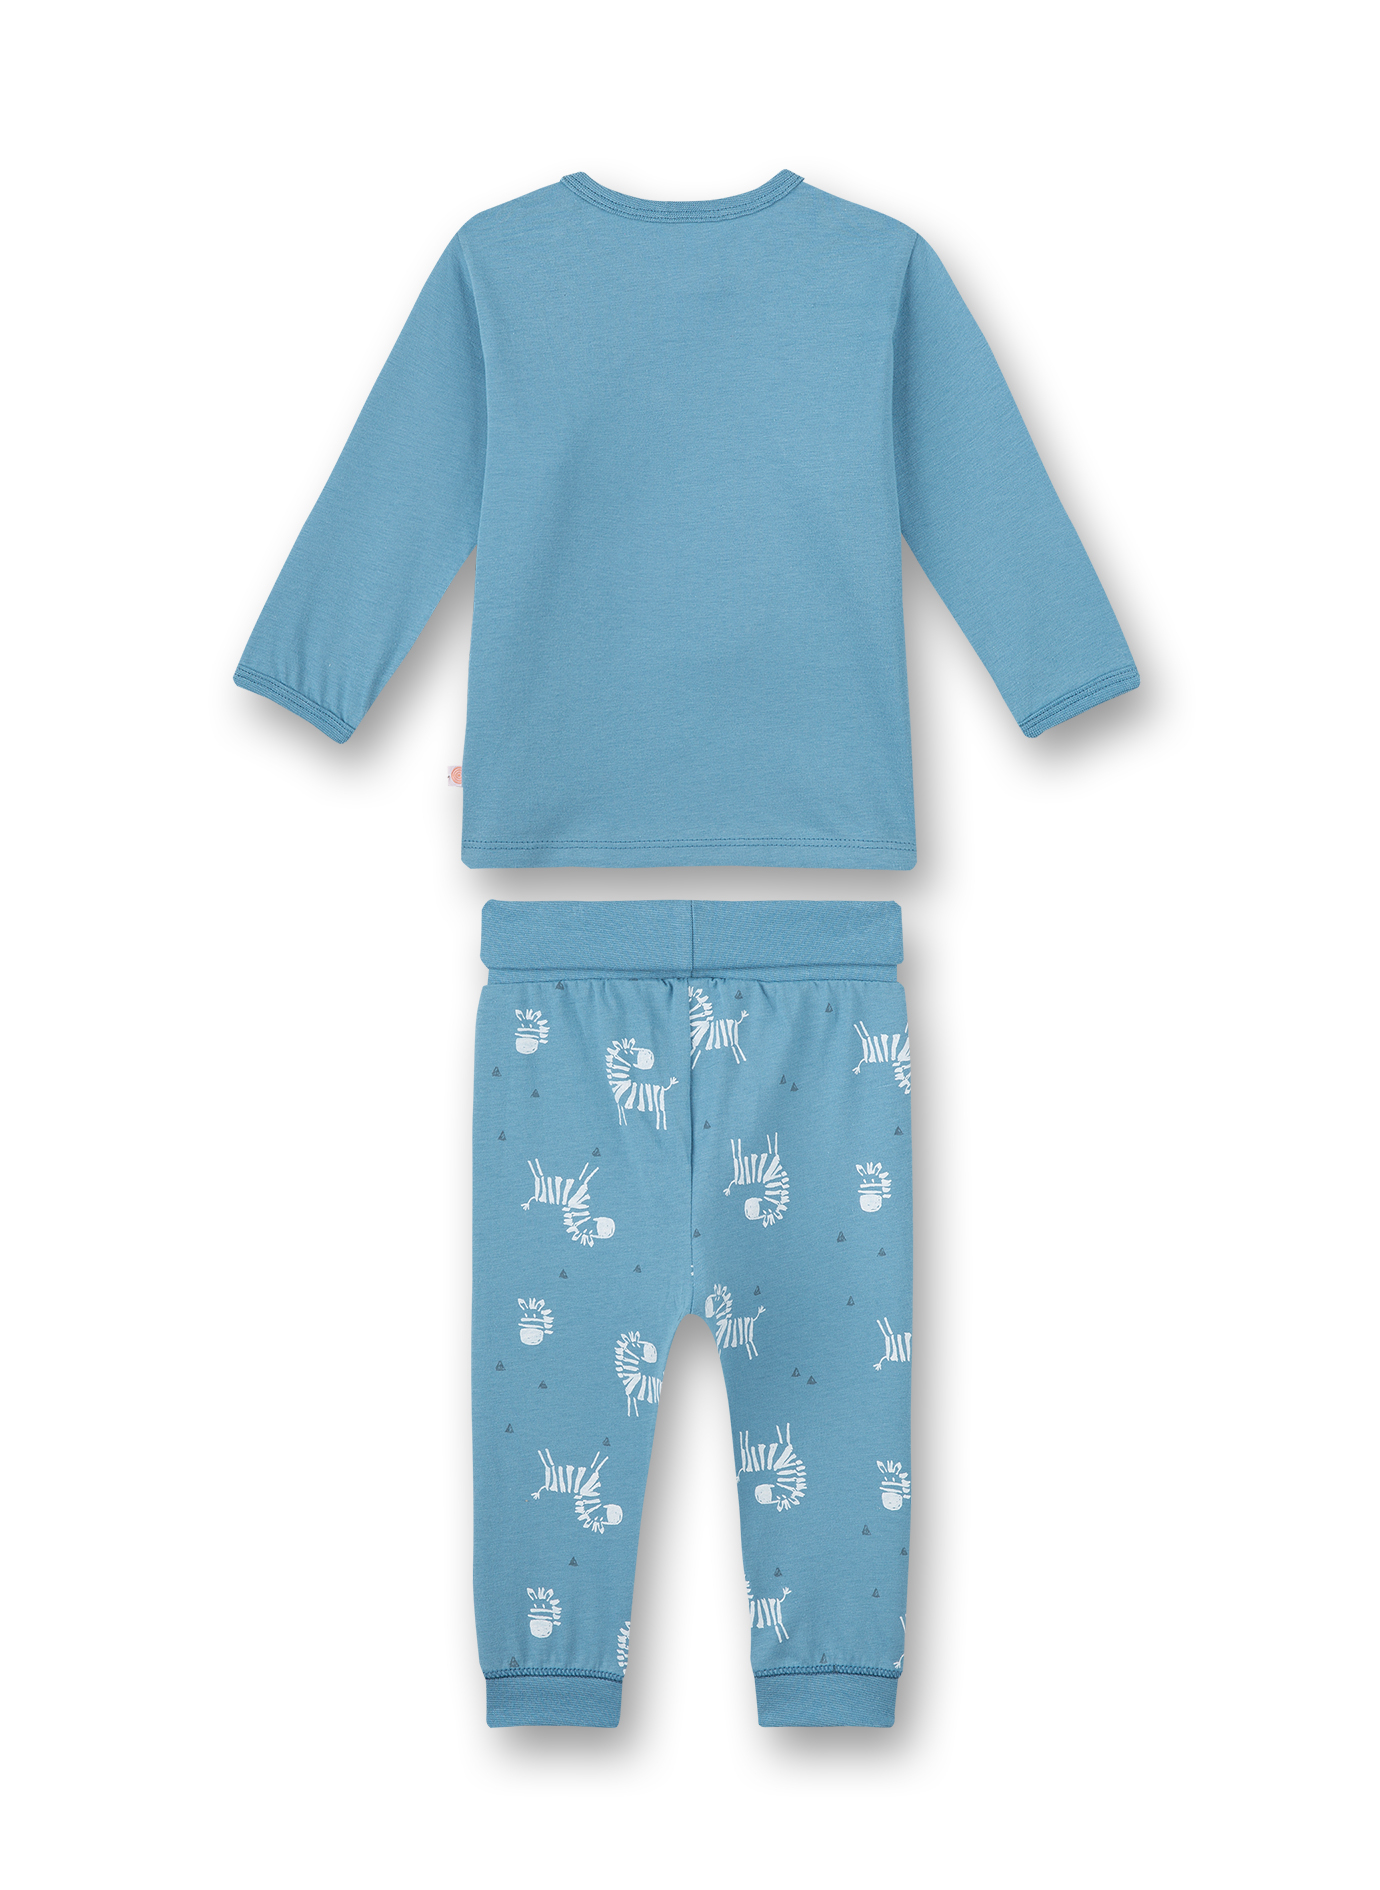 Jungen-Schlafanzug lang Blau Zebra